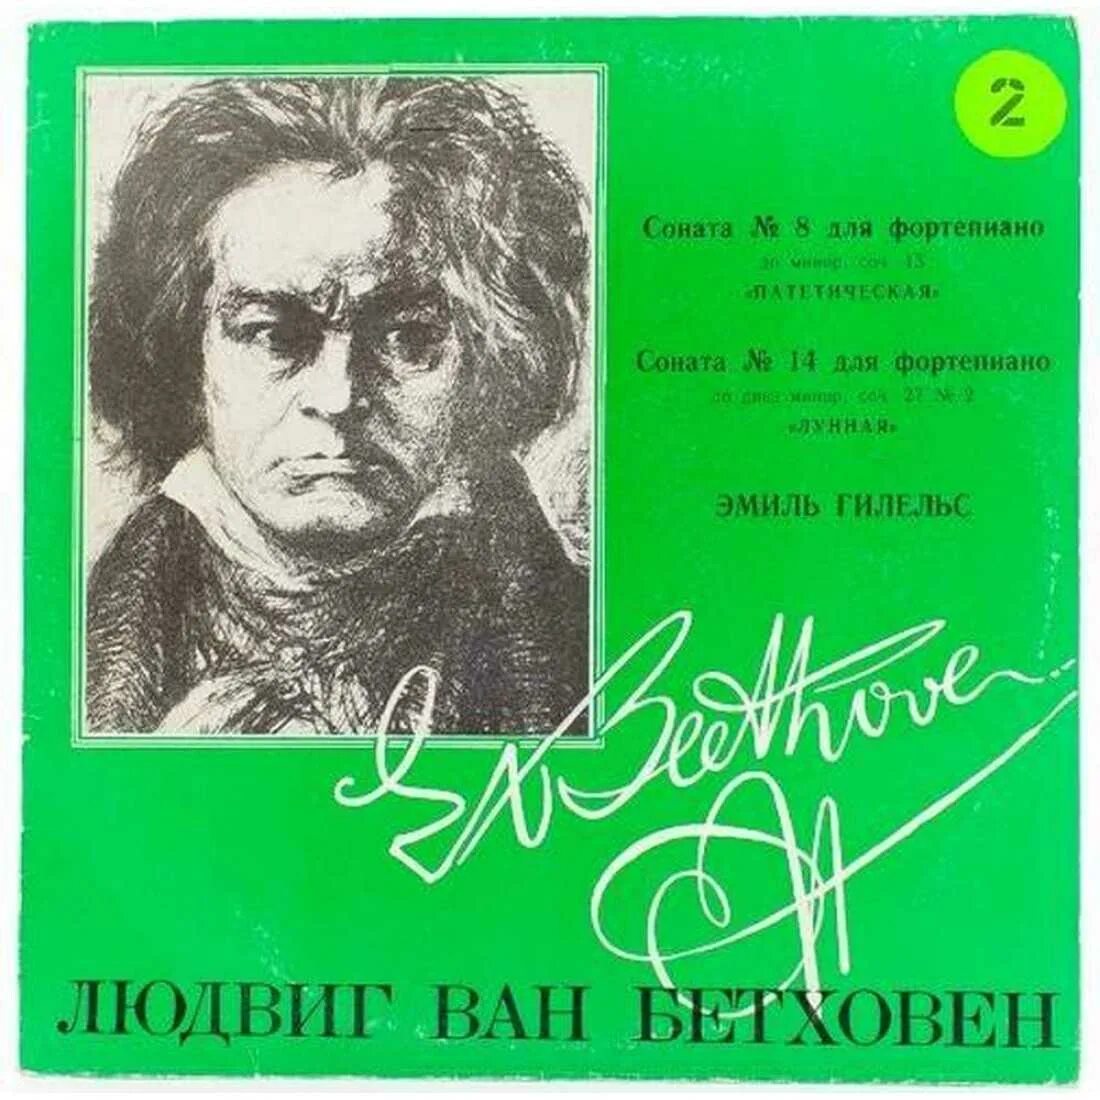 Сонаты no 8 л бетховена. Соната. Л. Бетховен. Соната №8 ("Патетическая").. Ludwig van Beethoven - Соната №14..